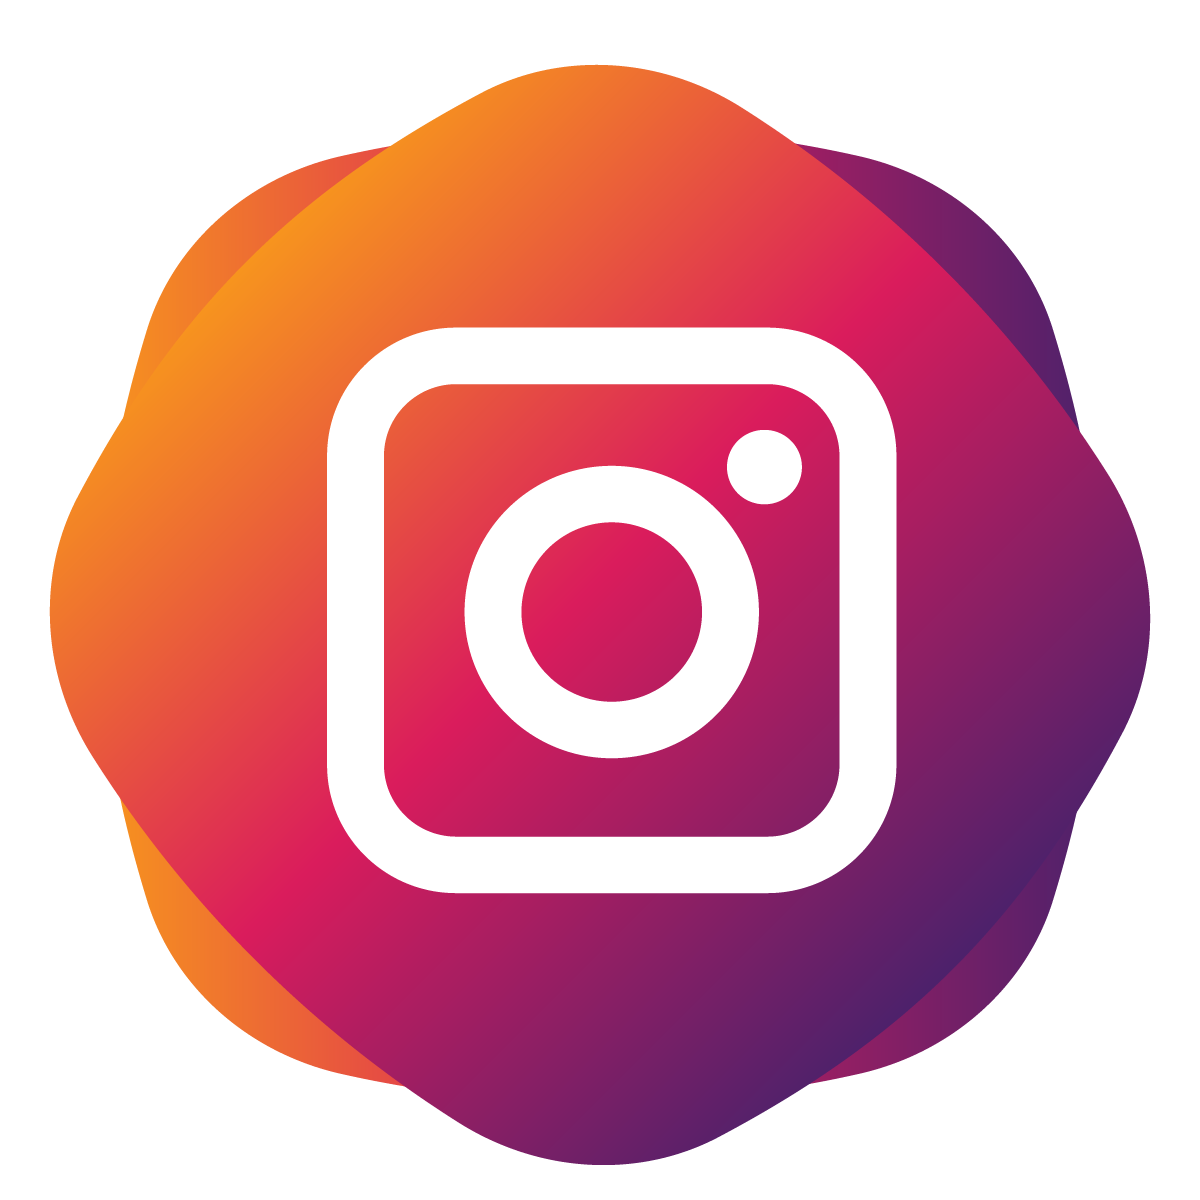 Инстаграм ком. Логотип Инстаграмм. Значки ИНМТ. Иконки для инстаграма. Иконка Instagram.